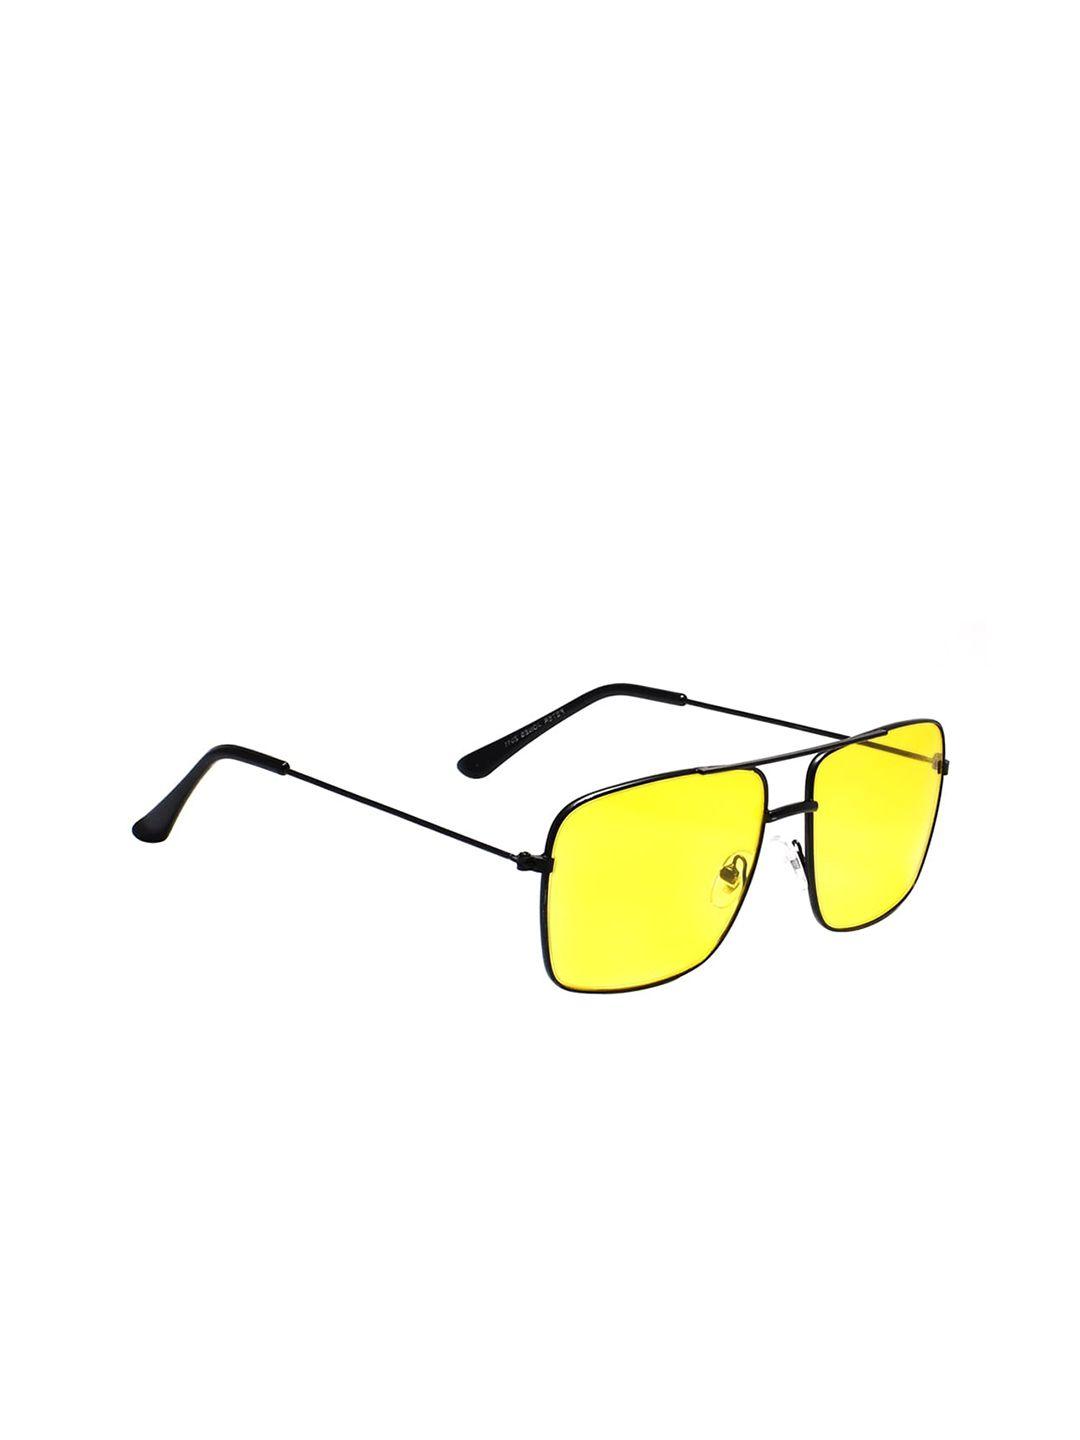 peter jones eyewear unisex lens & square sunglasses with uv protected lens